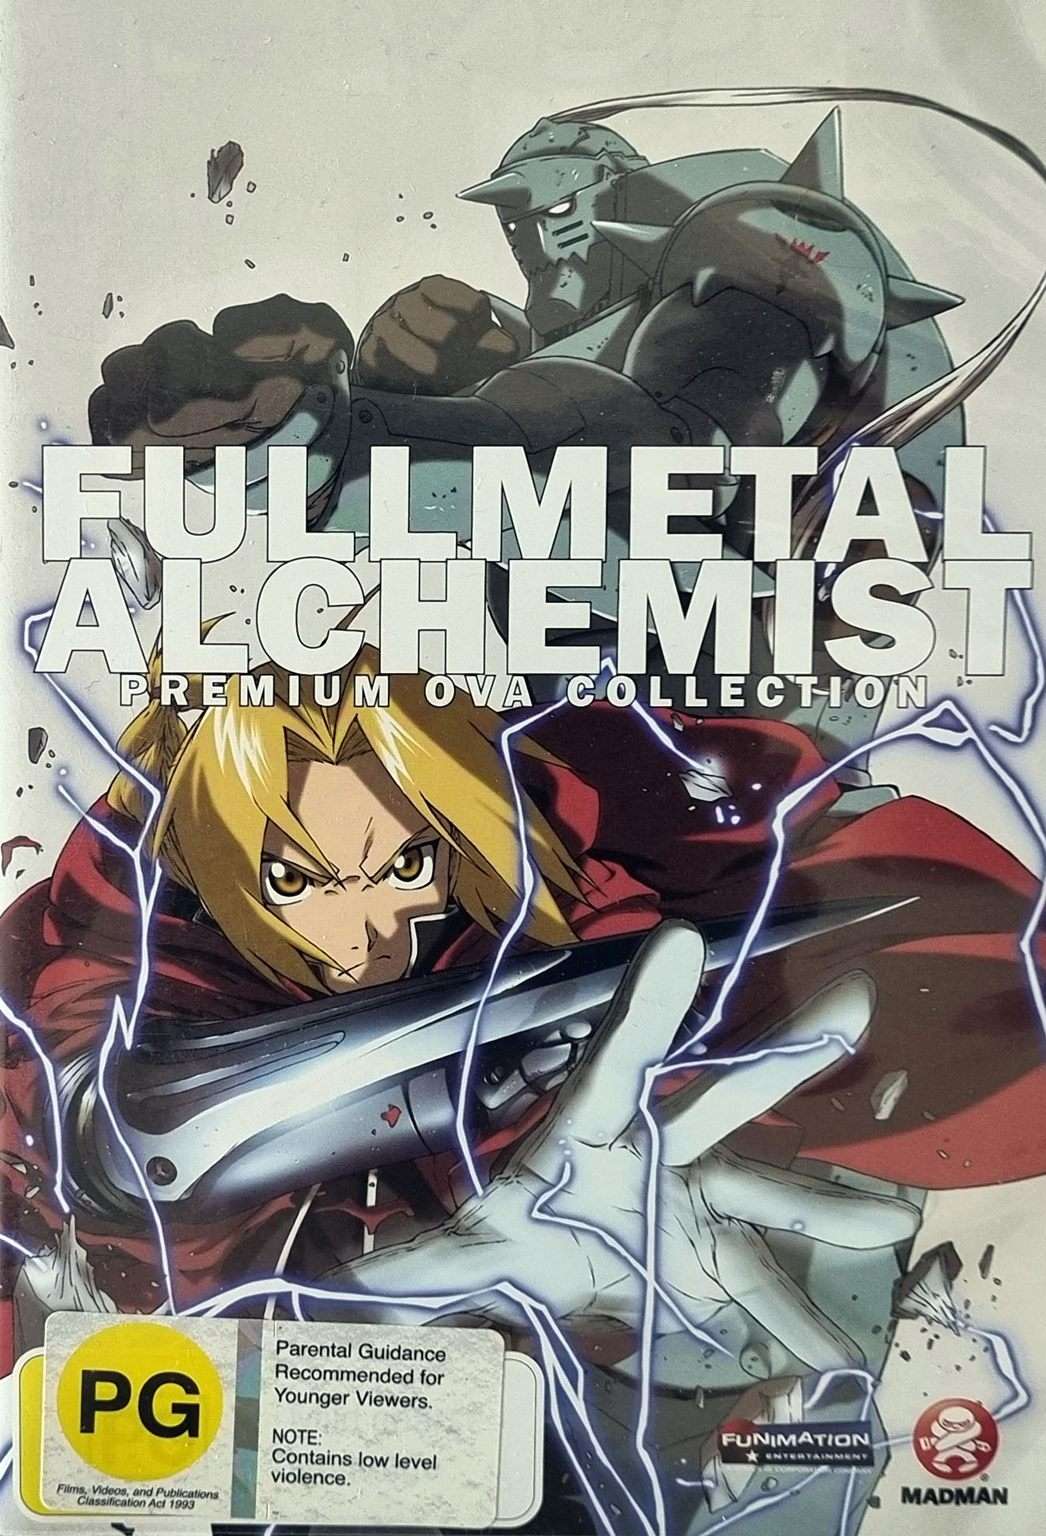 Full Metal Alchemist Premium Ova Collection